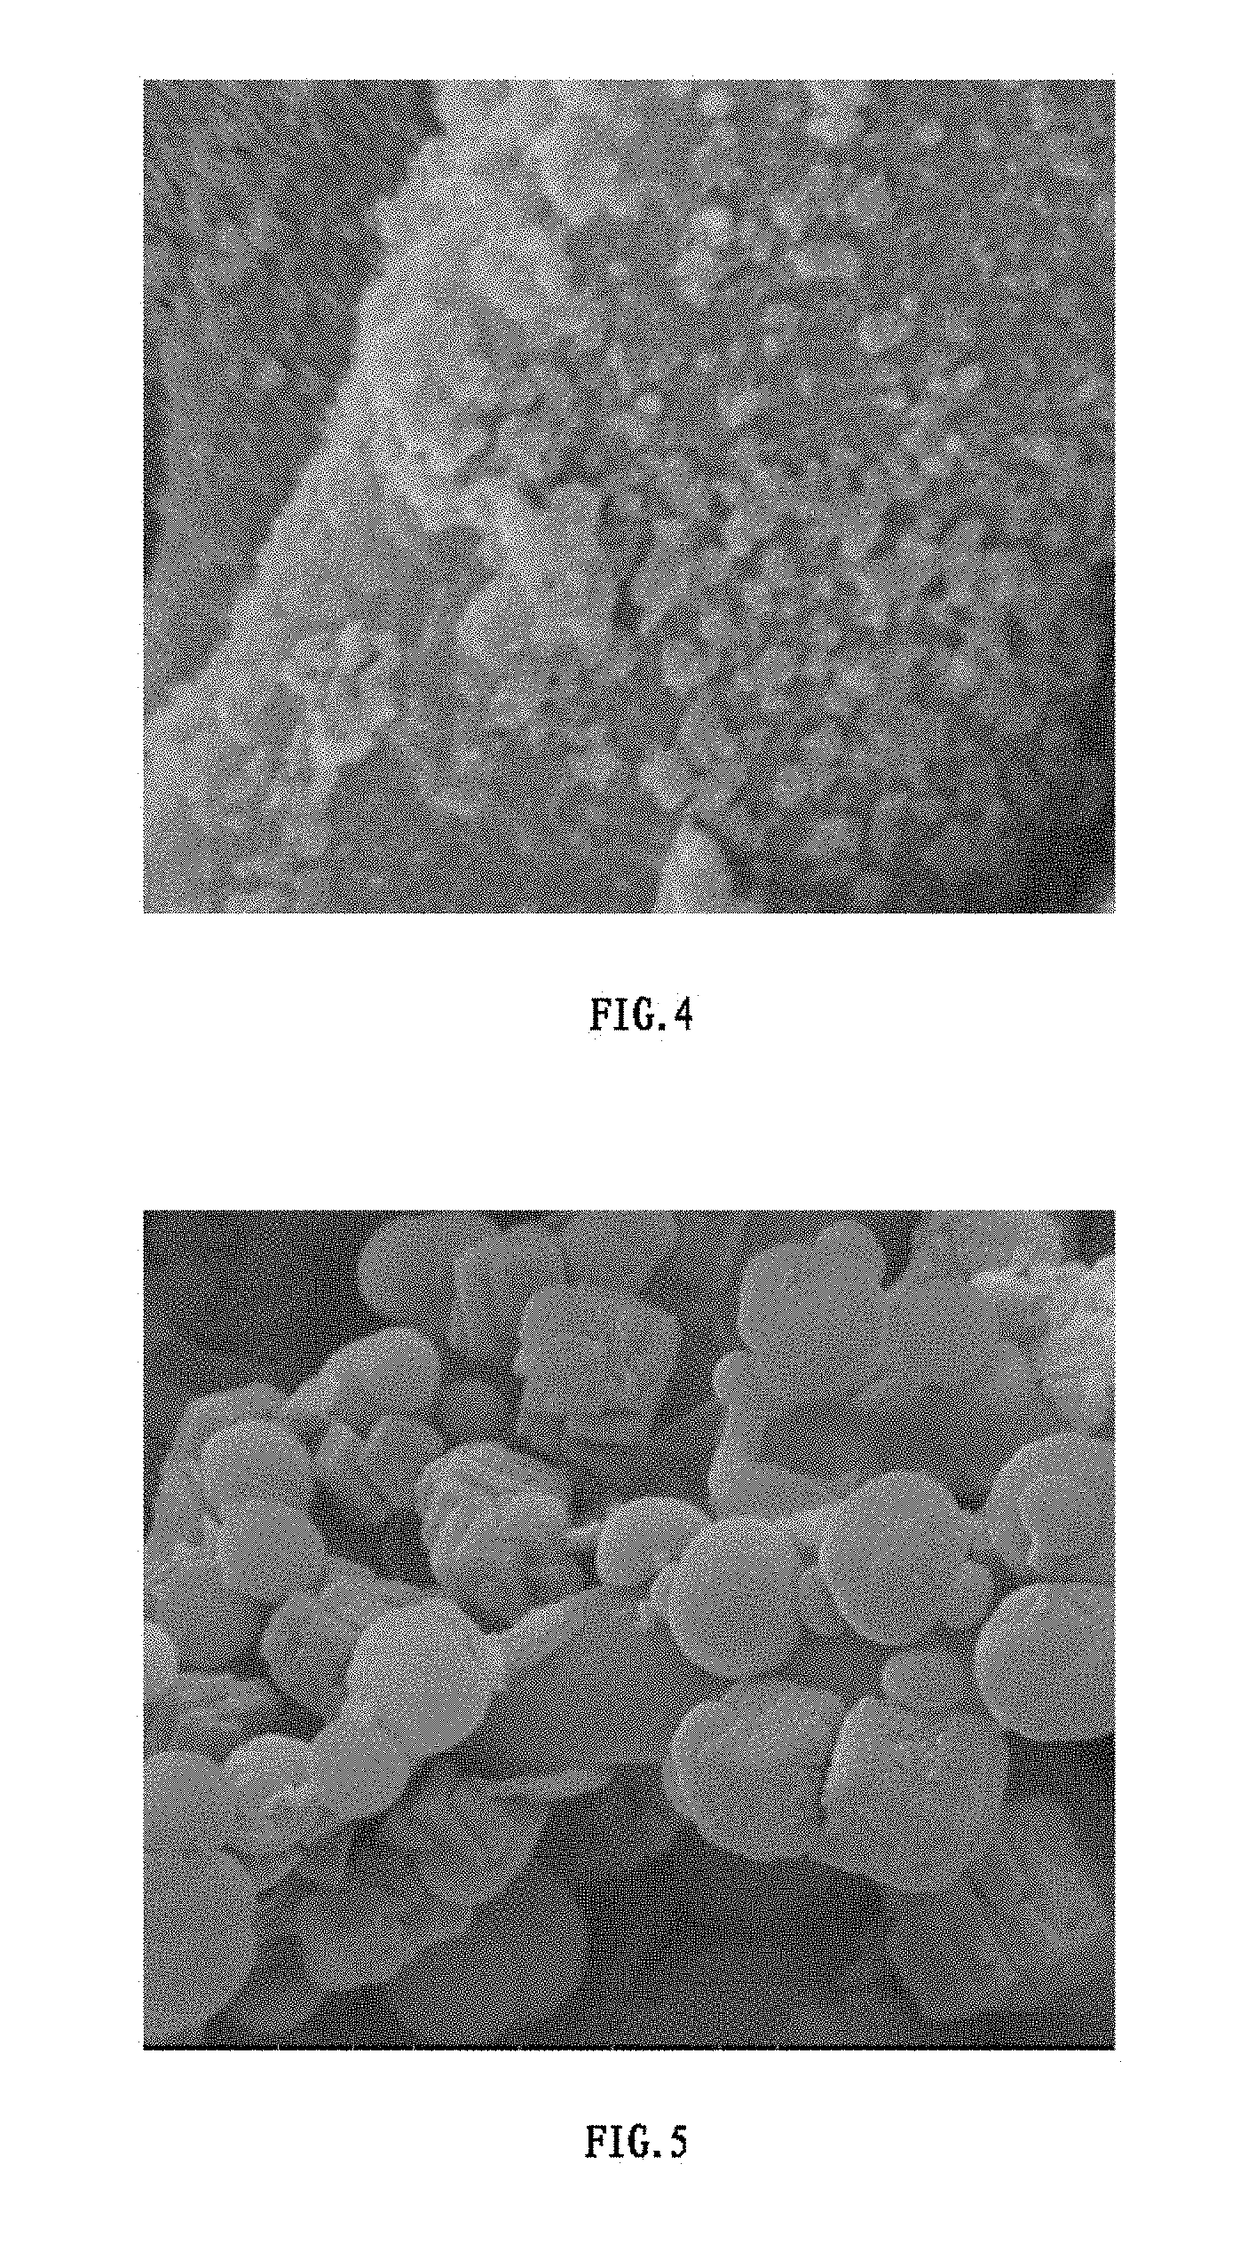 Nanomaterial-biomass fiber composite and preparation method thereof